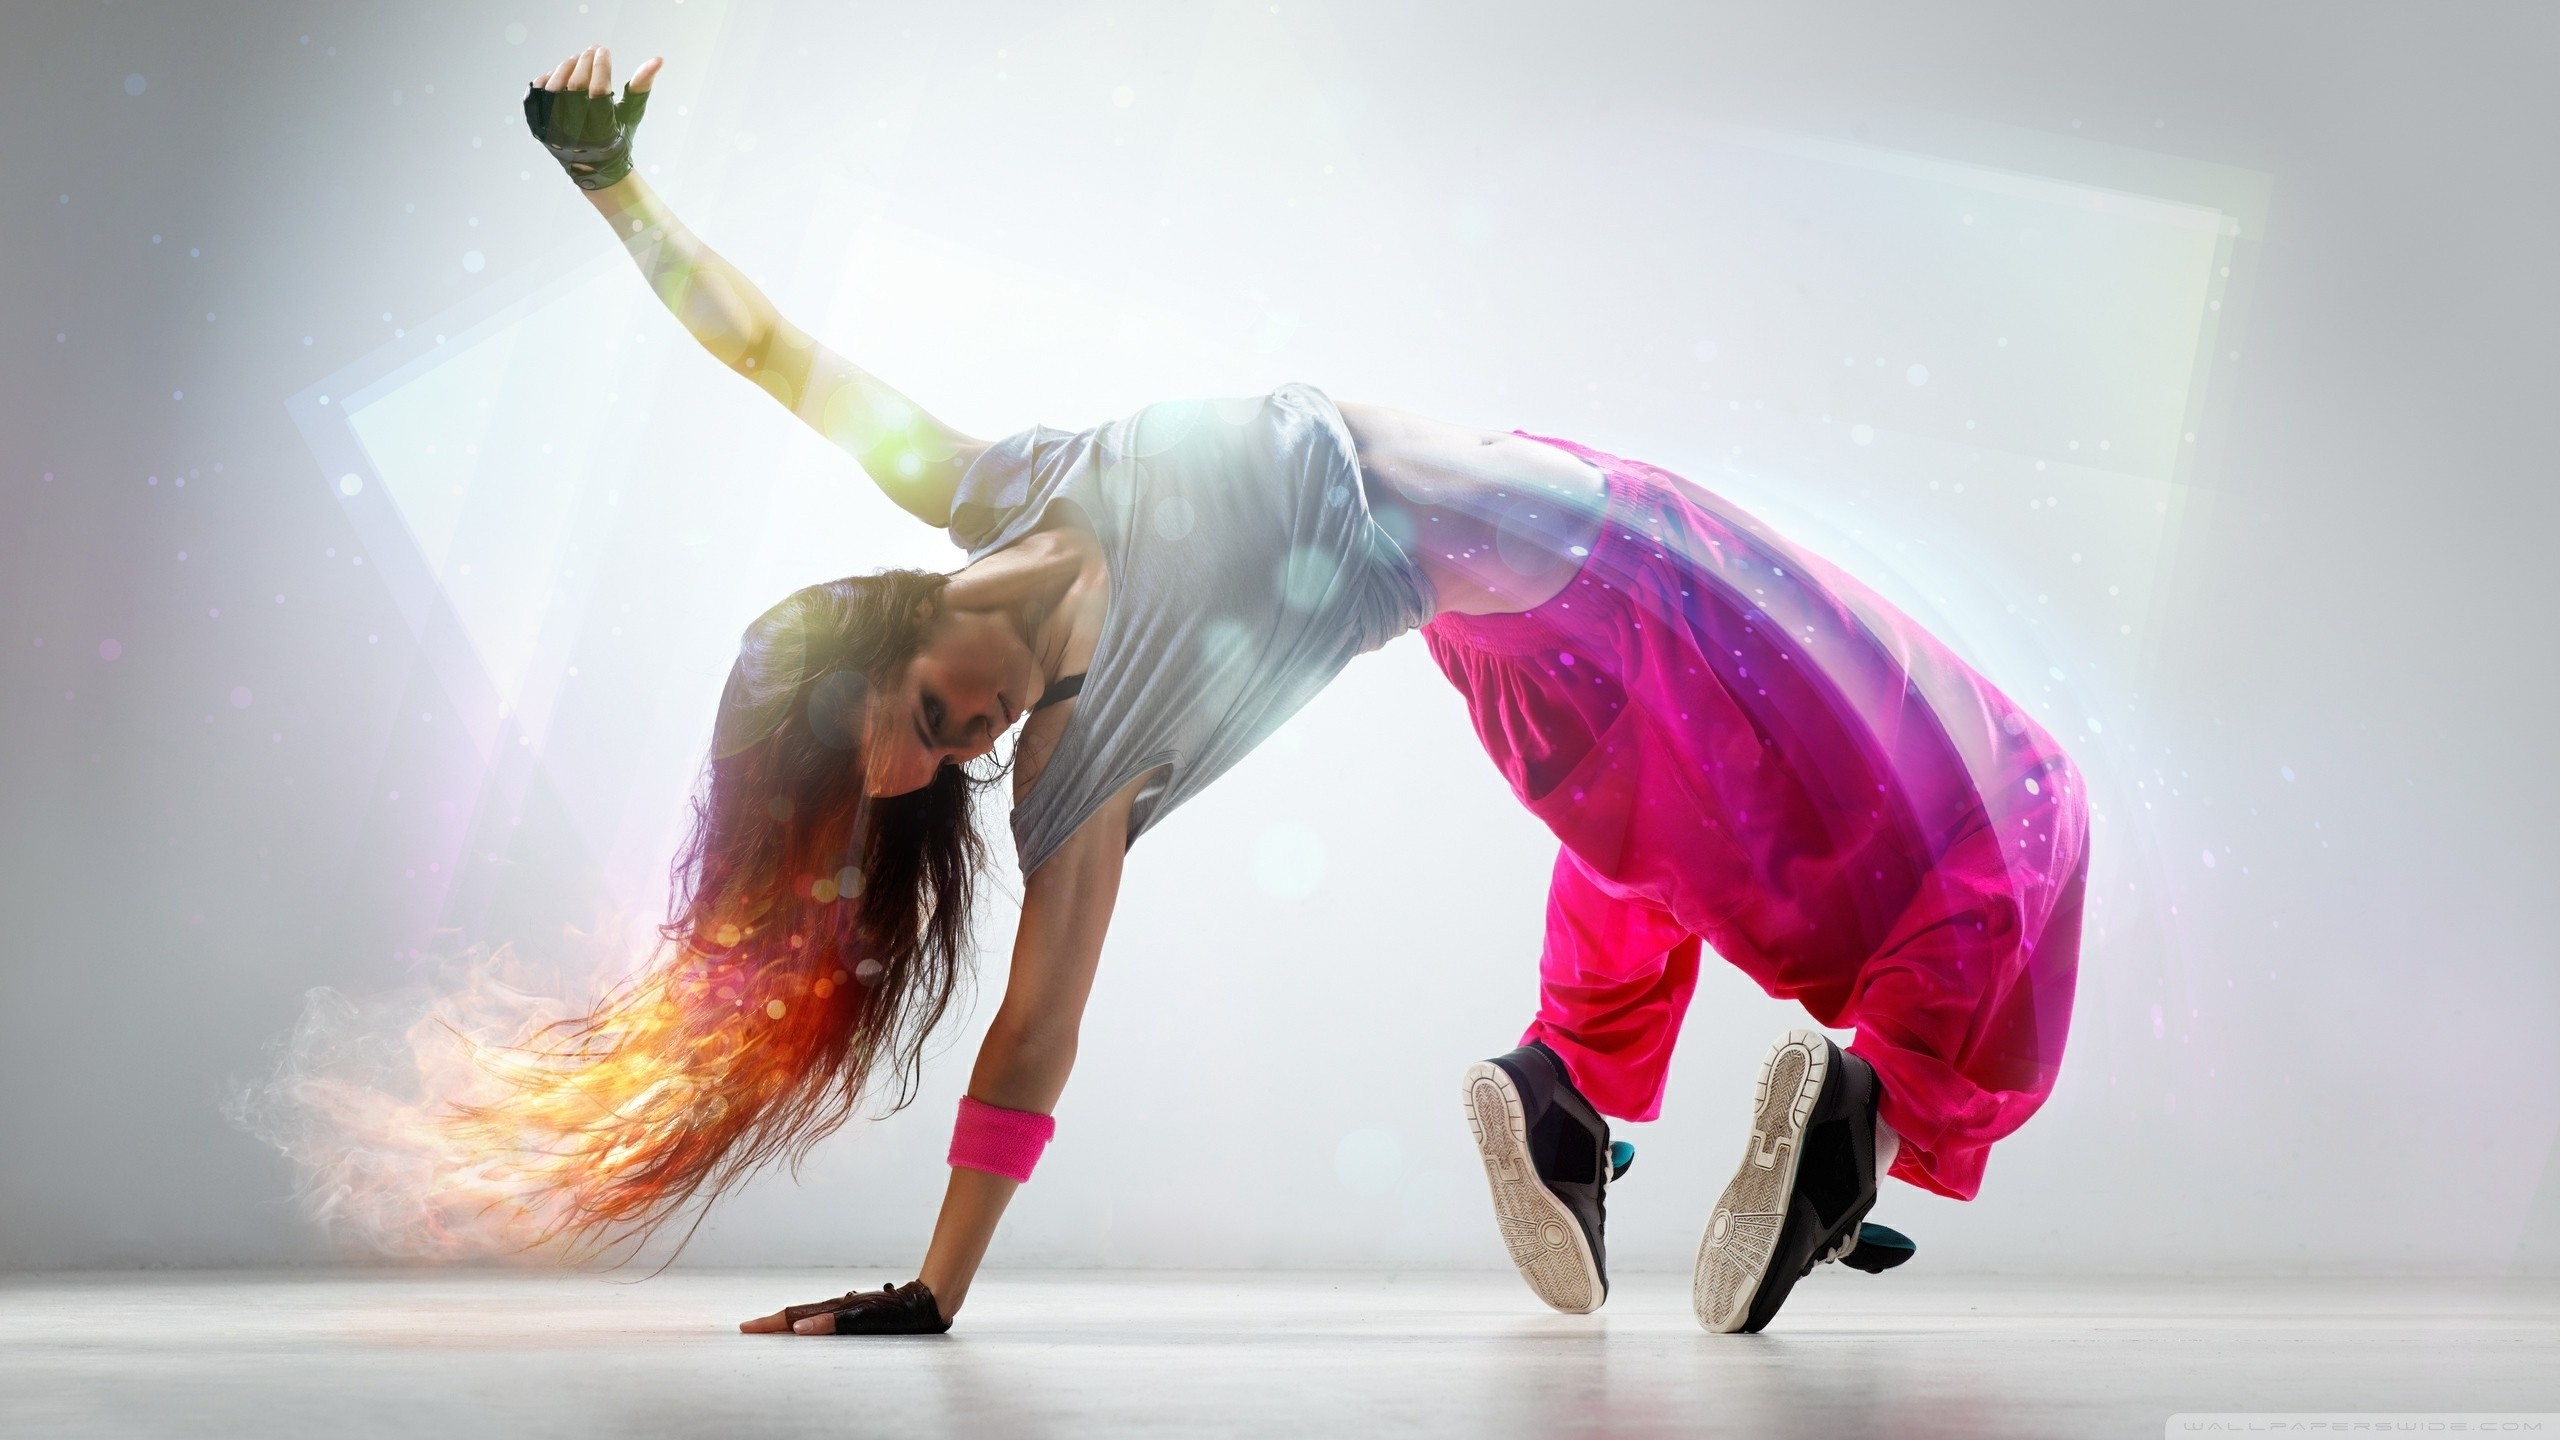 General 2560x1440 women dancing dancer digital art flexible long hair arms up